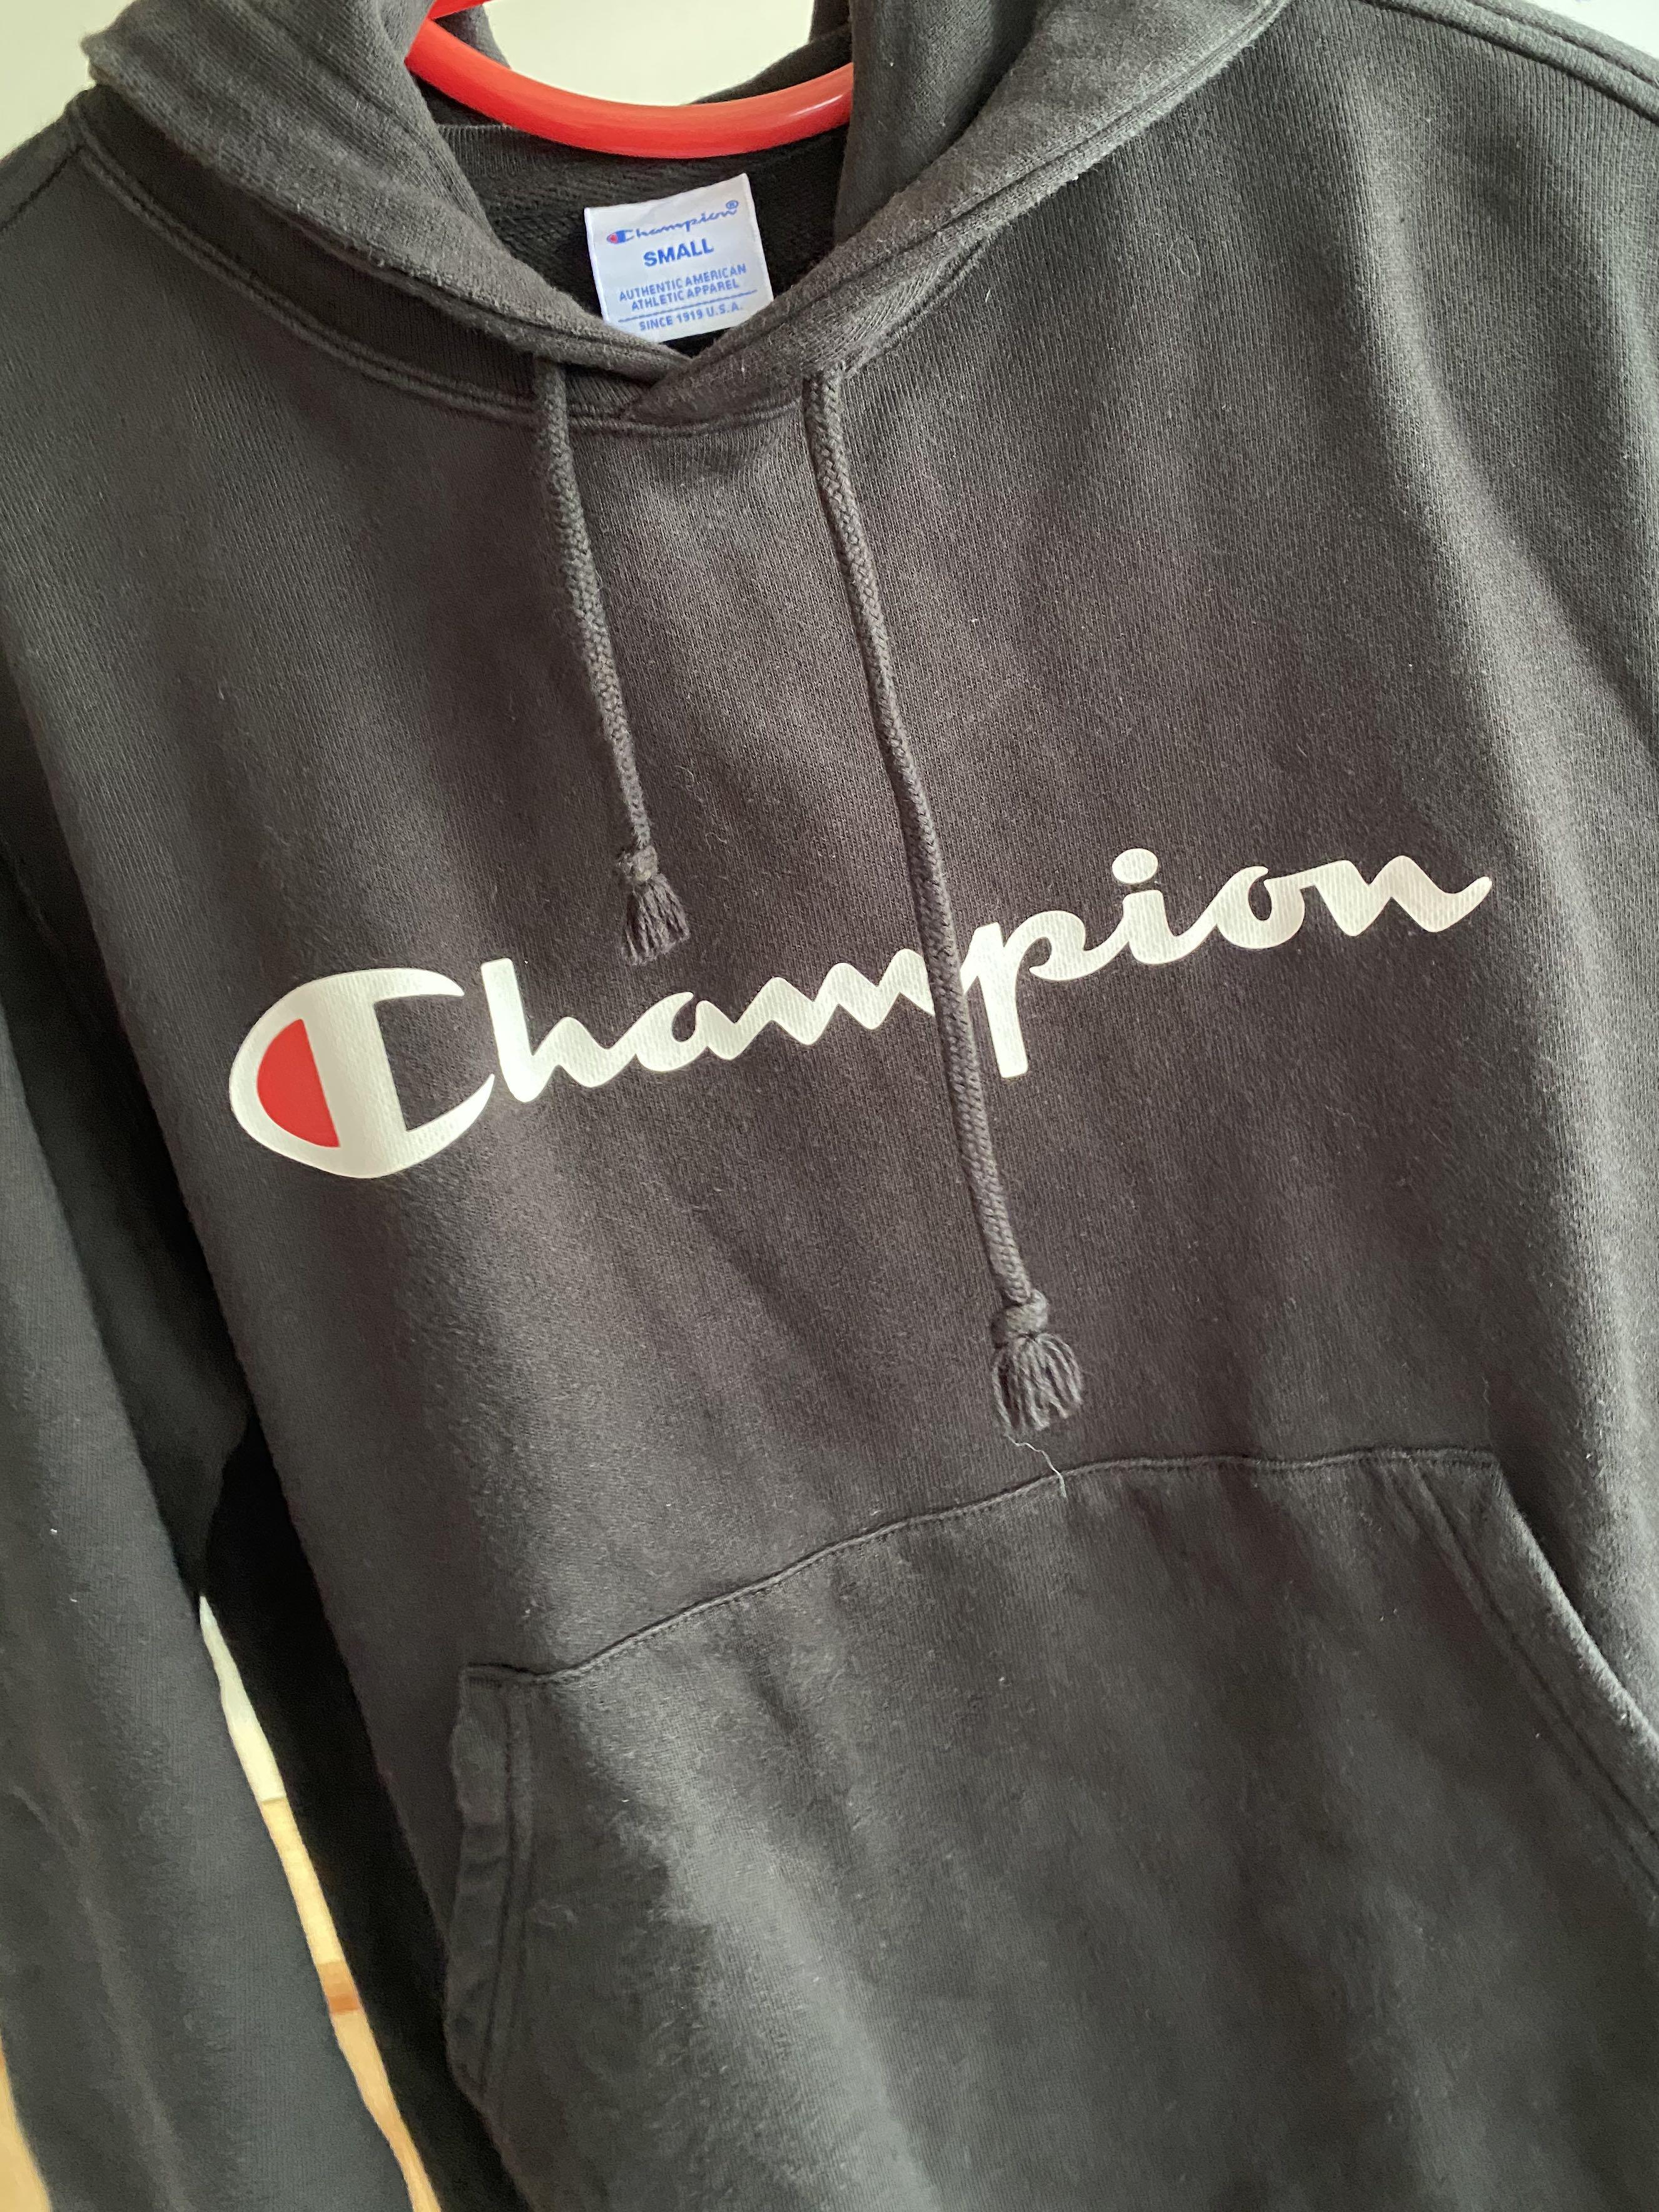 where can u buy champion clothing